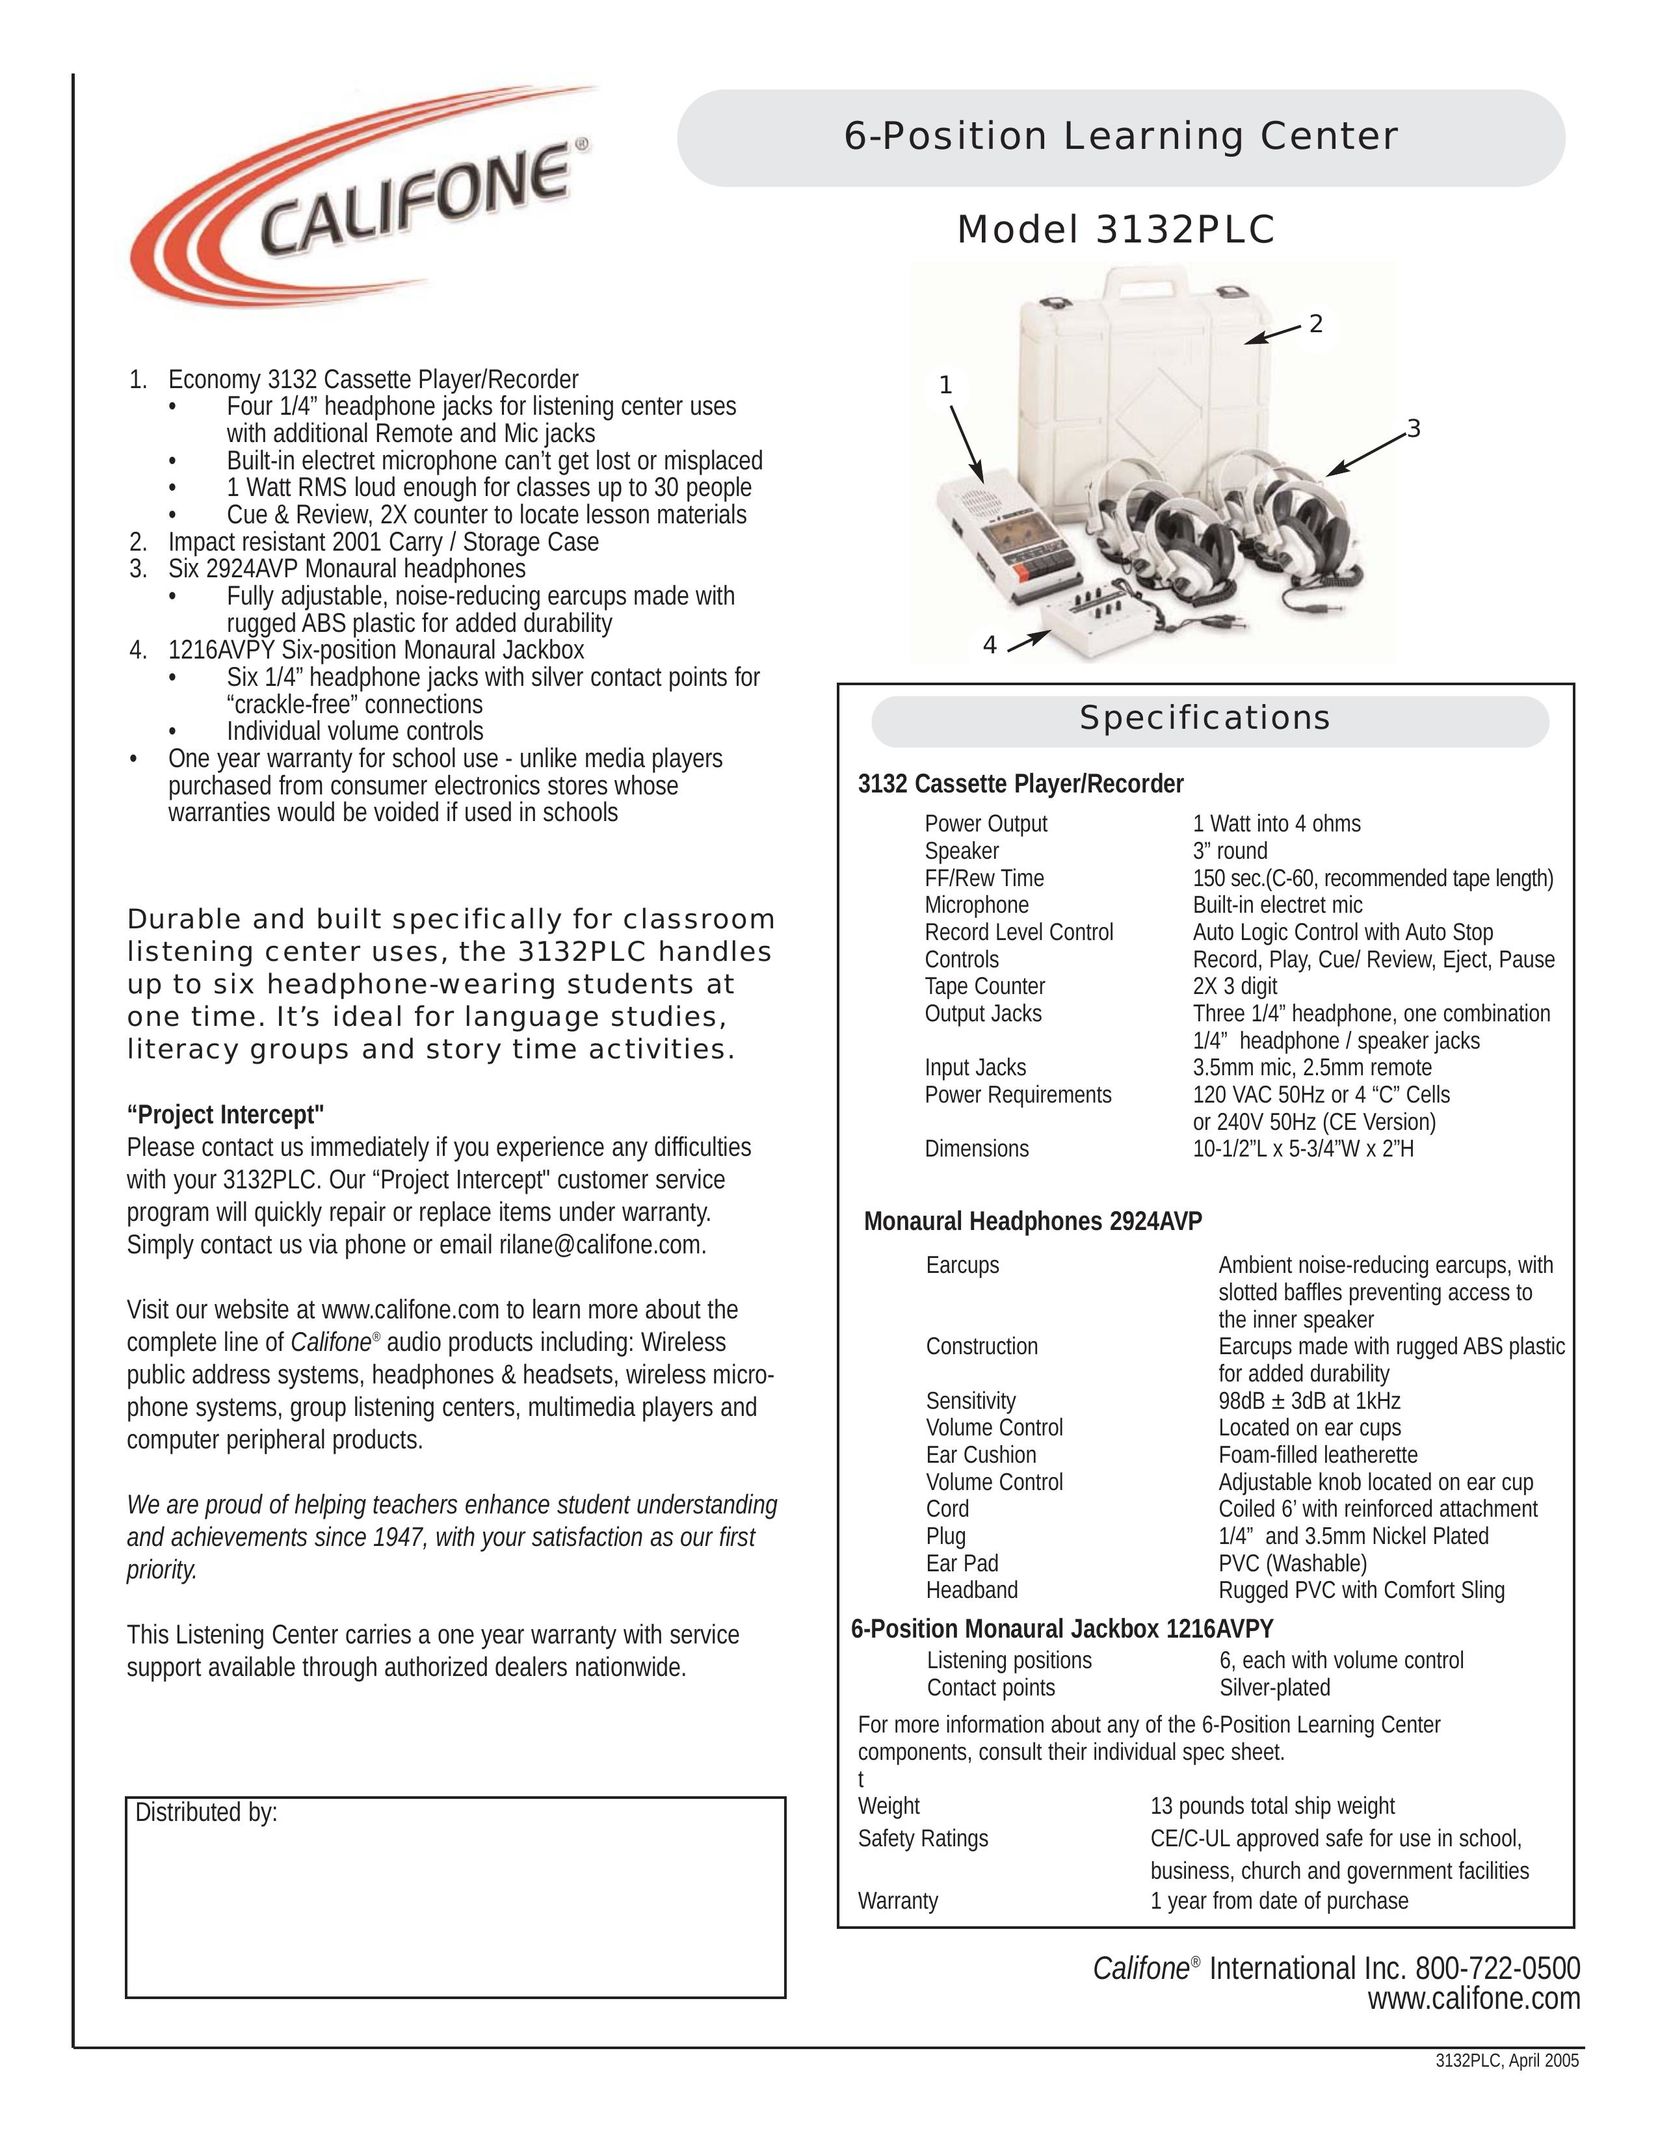 Califone 3132PLC Cassette Player User Manual (Page 1)